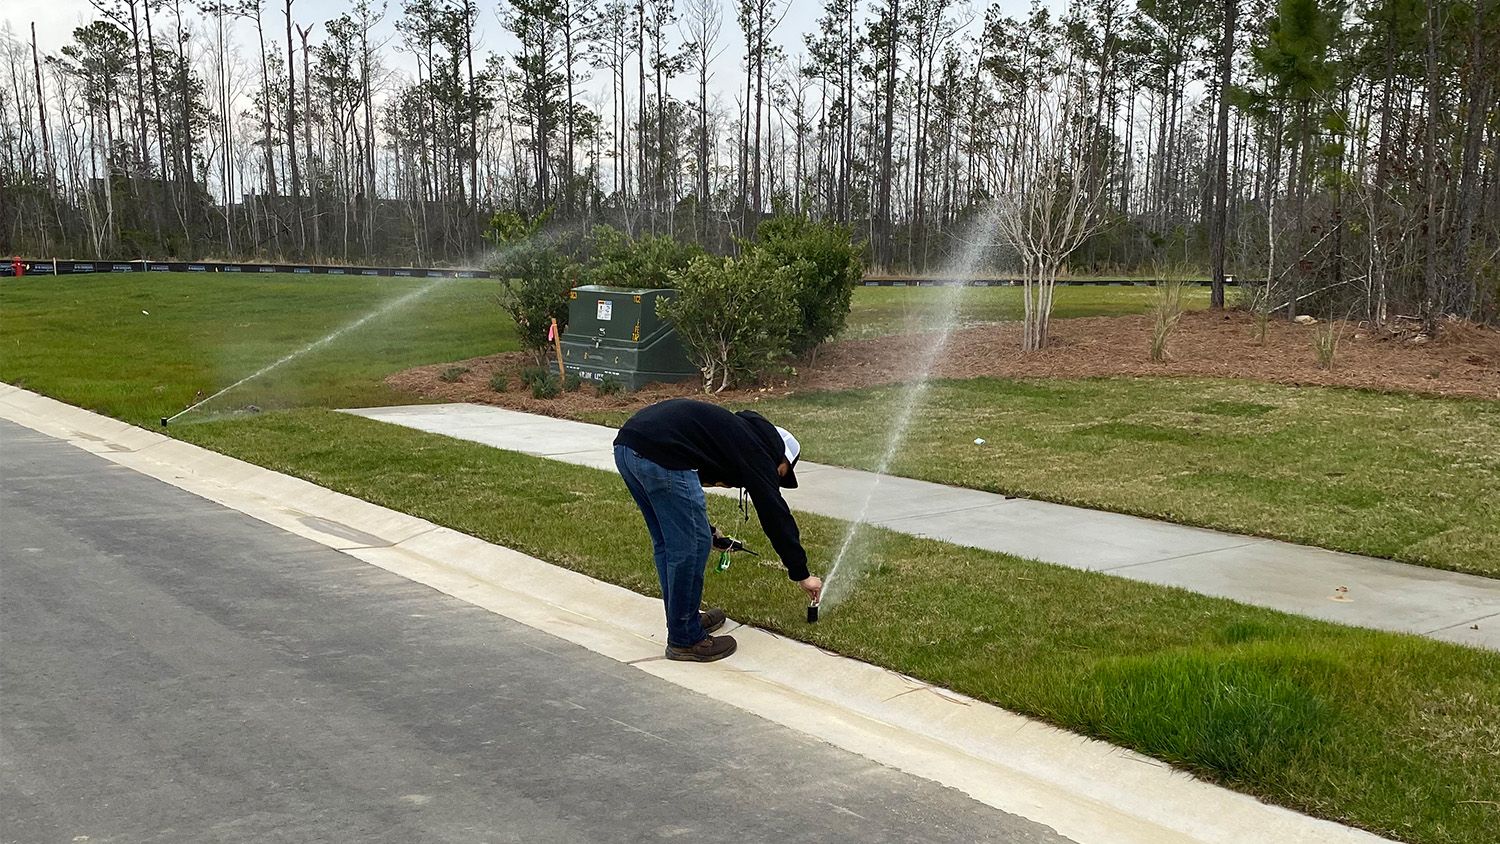 A student adjusts a turfgrass irrigation sprinkler